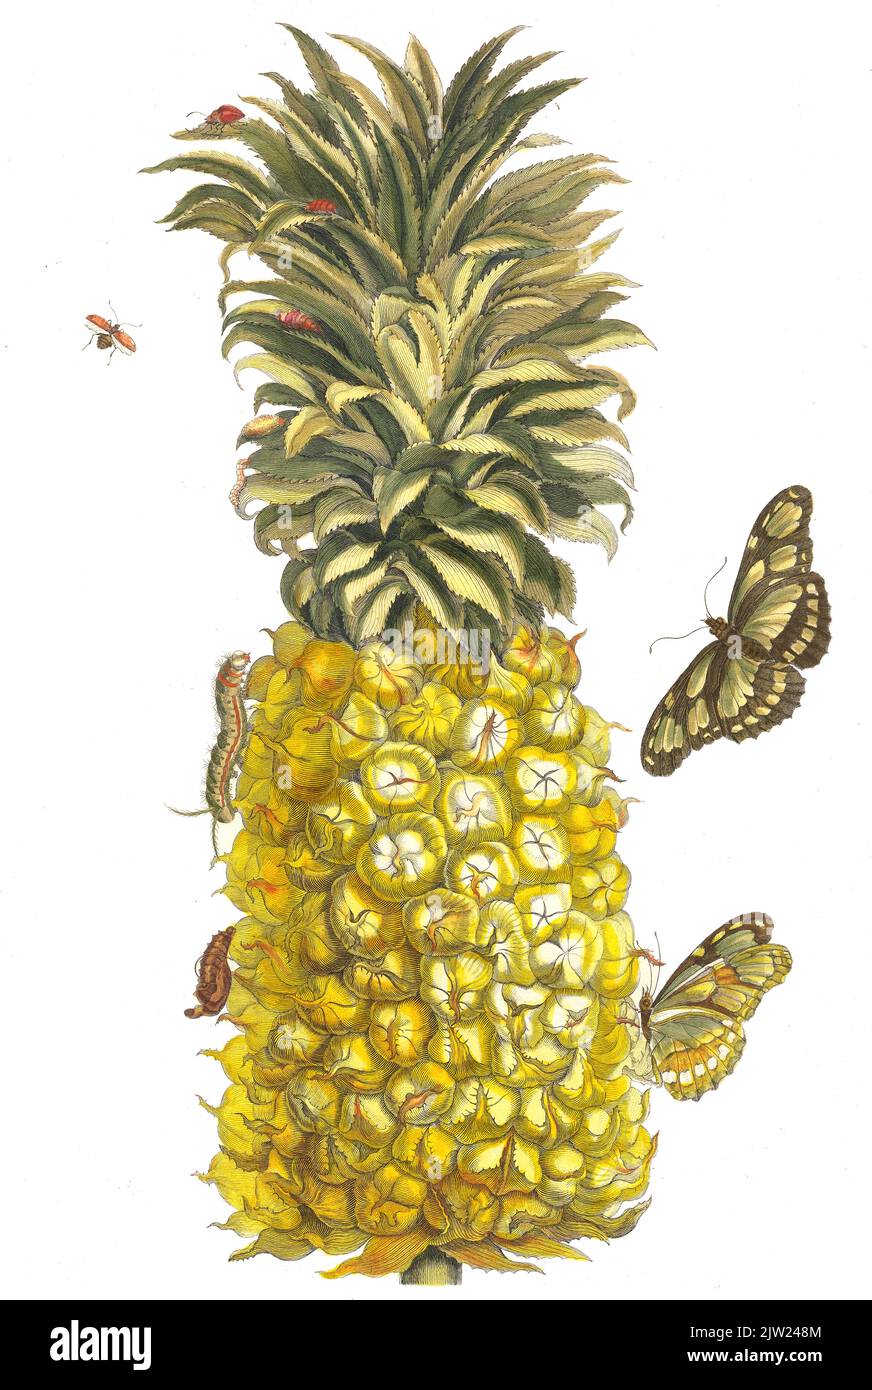 Maria Sibylla Merian - ananas - 1705 - ananas mur Foto Stock